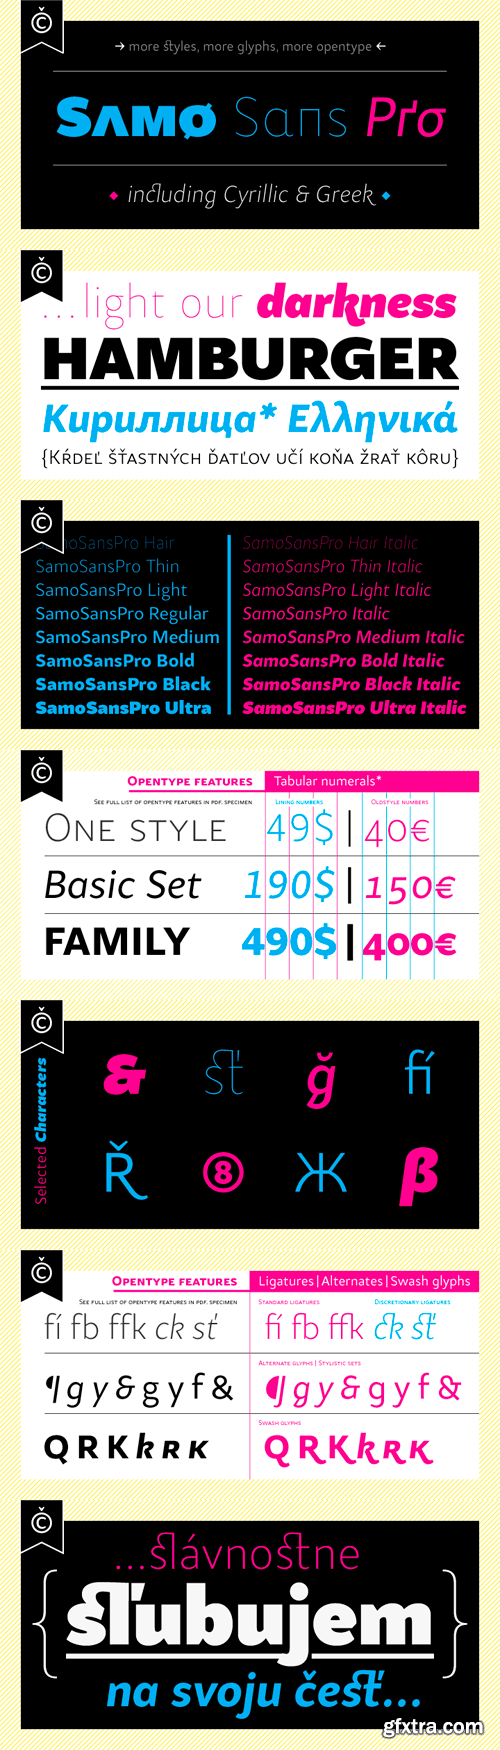 Samo Sans Pro Font Family - 16 Fonts for $490